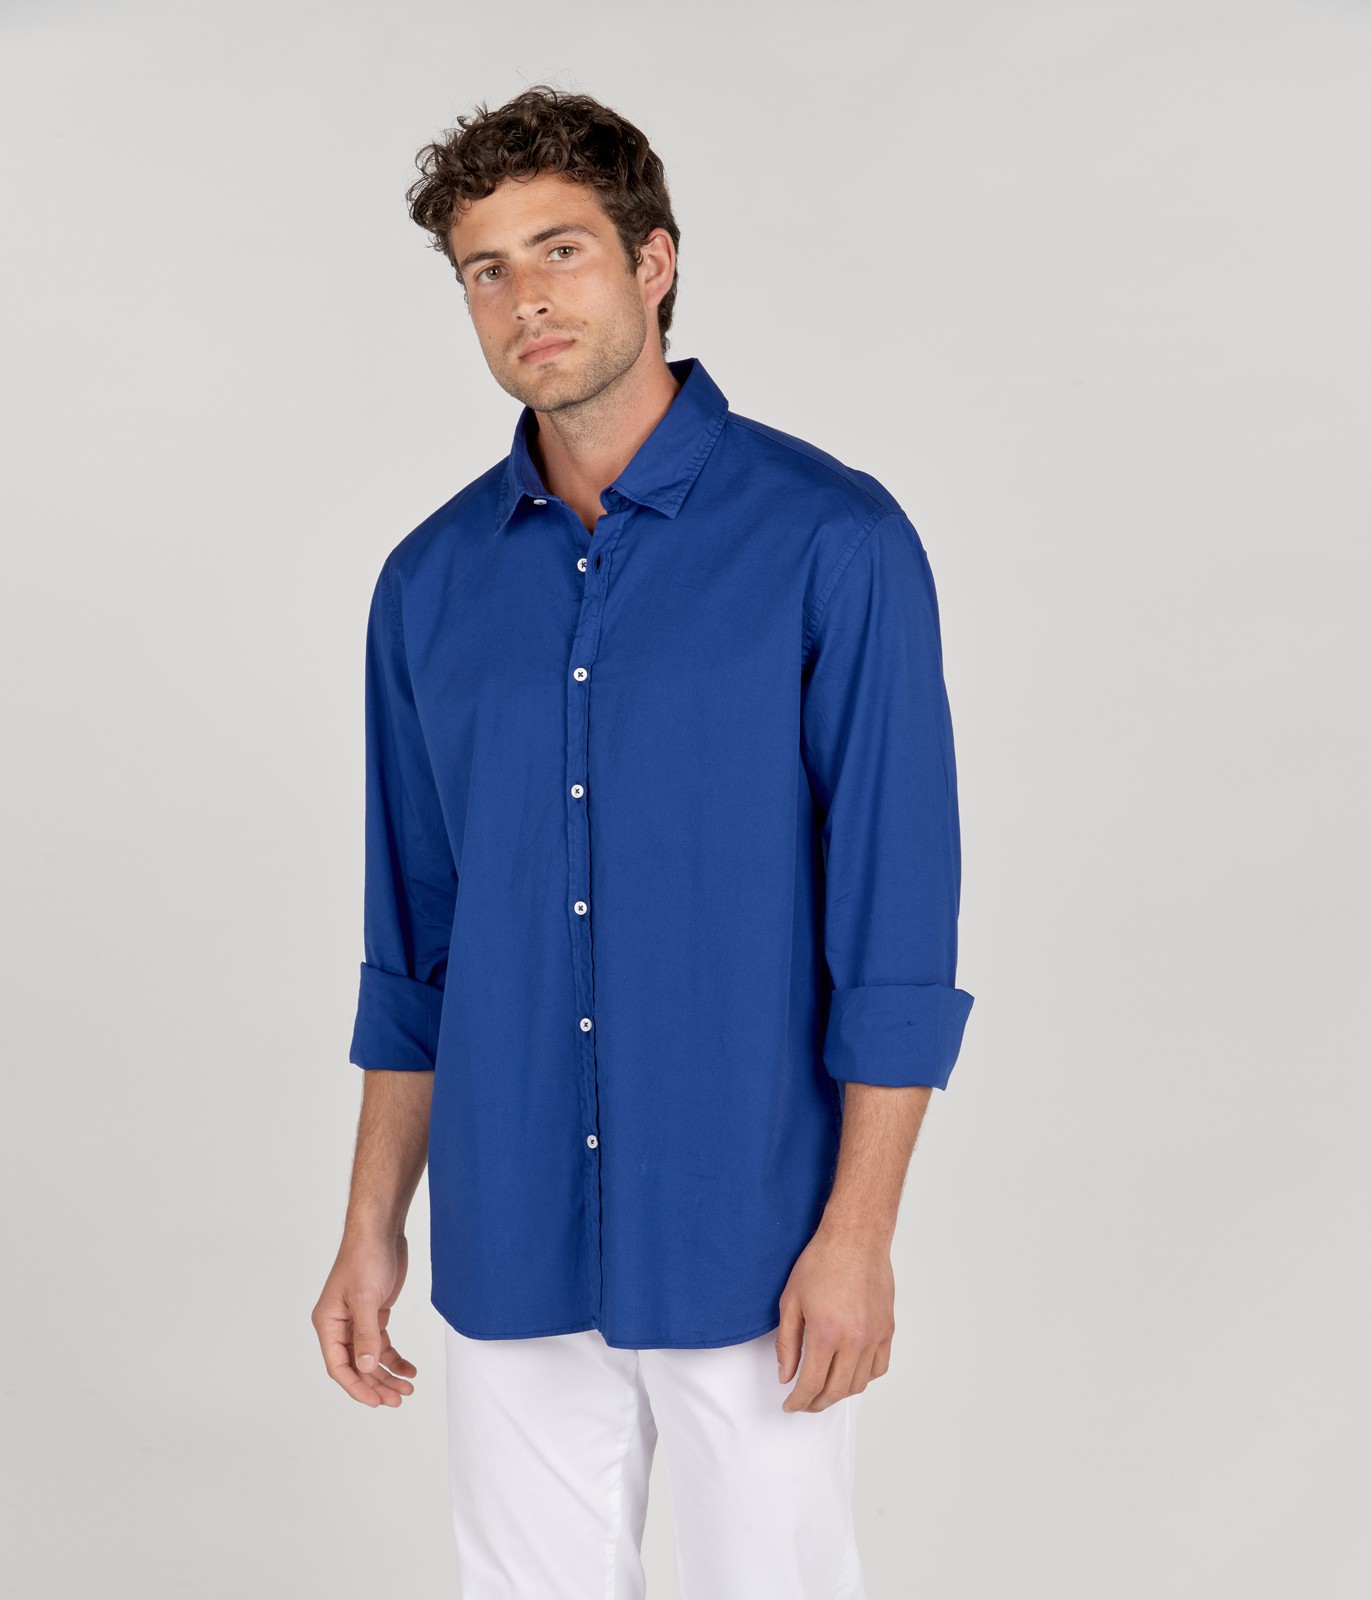 Plain indigo color long sleeves shirt for men Quality brand Europann